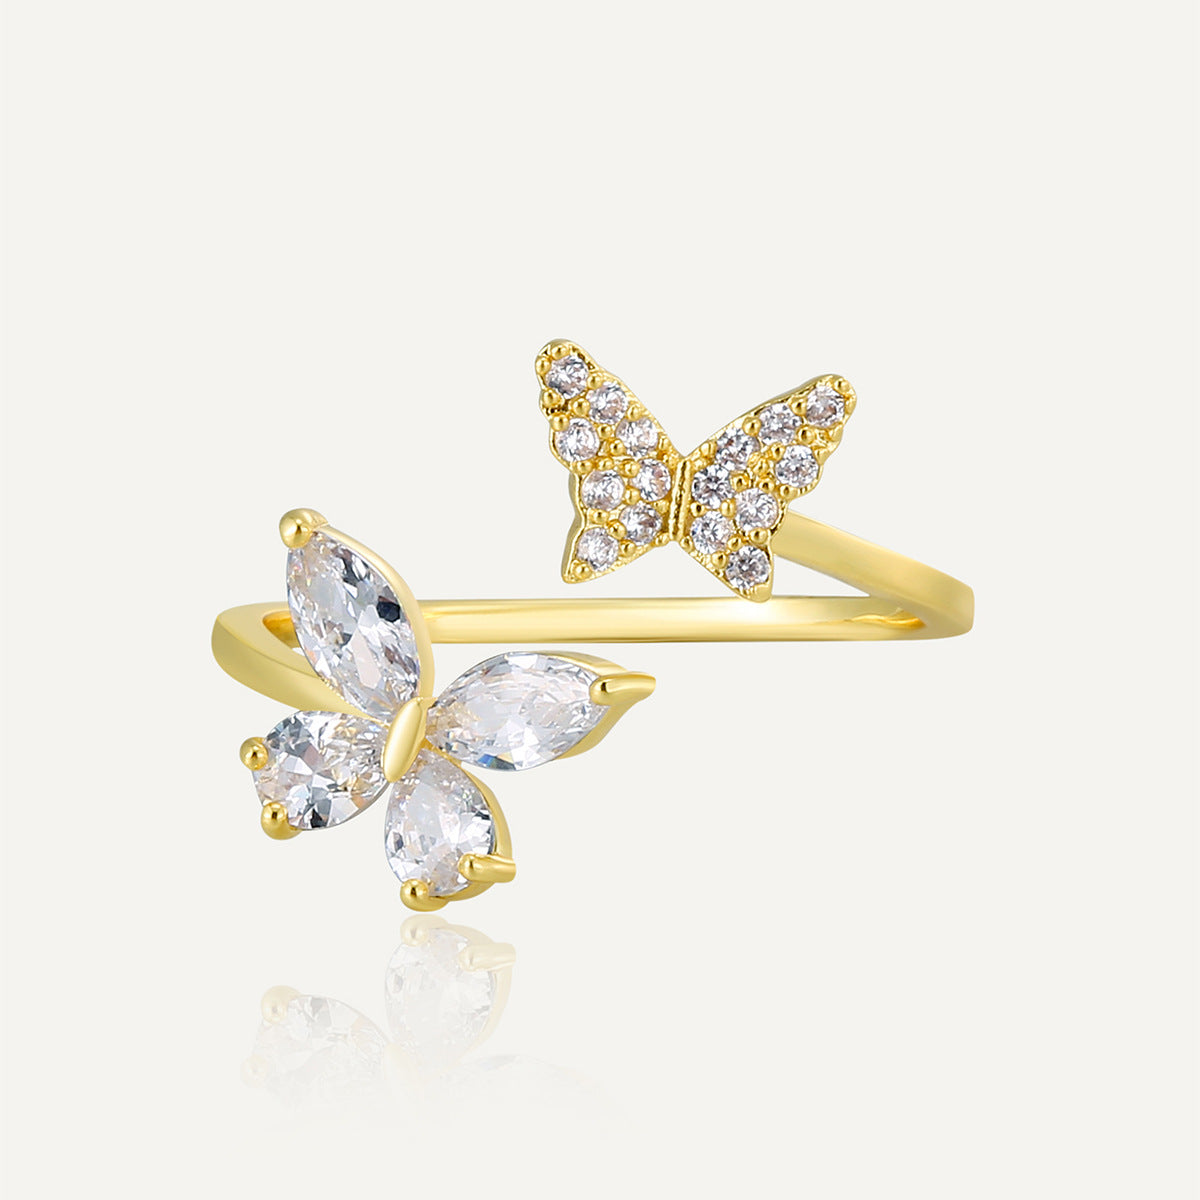 Butterfly diamond ring